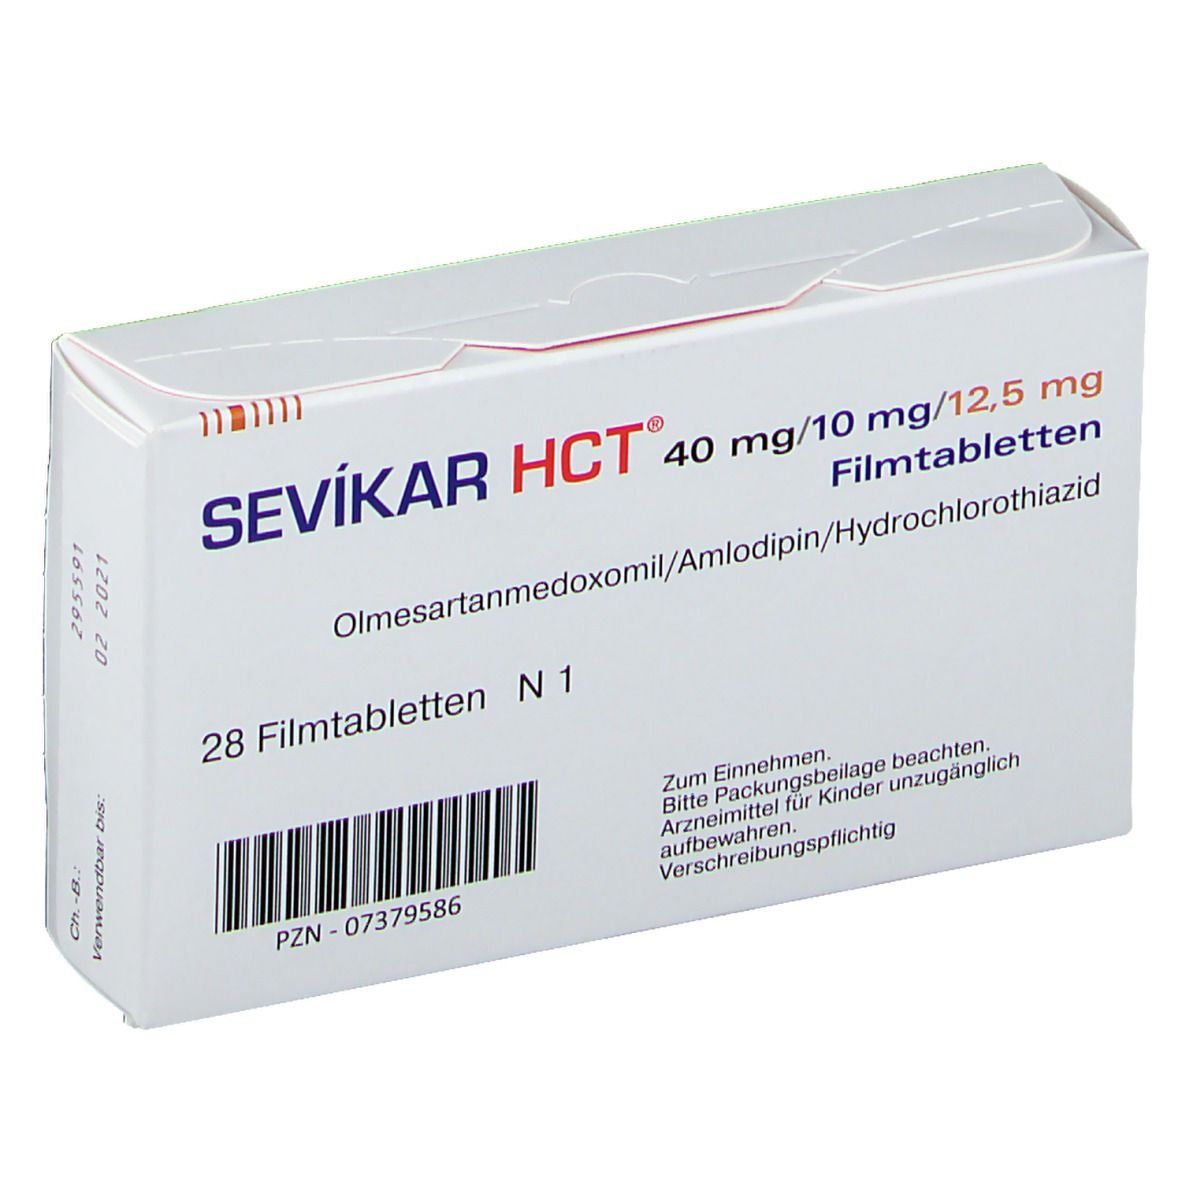 SEVIKAR HCT® 40mg/10mg/12,5mg